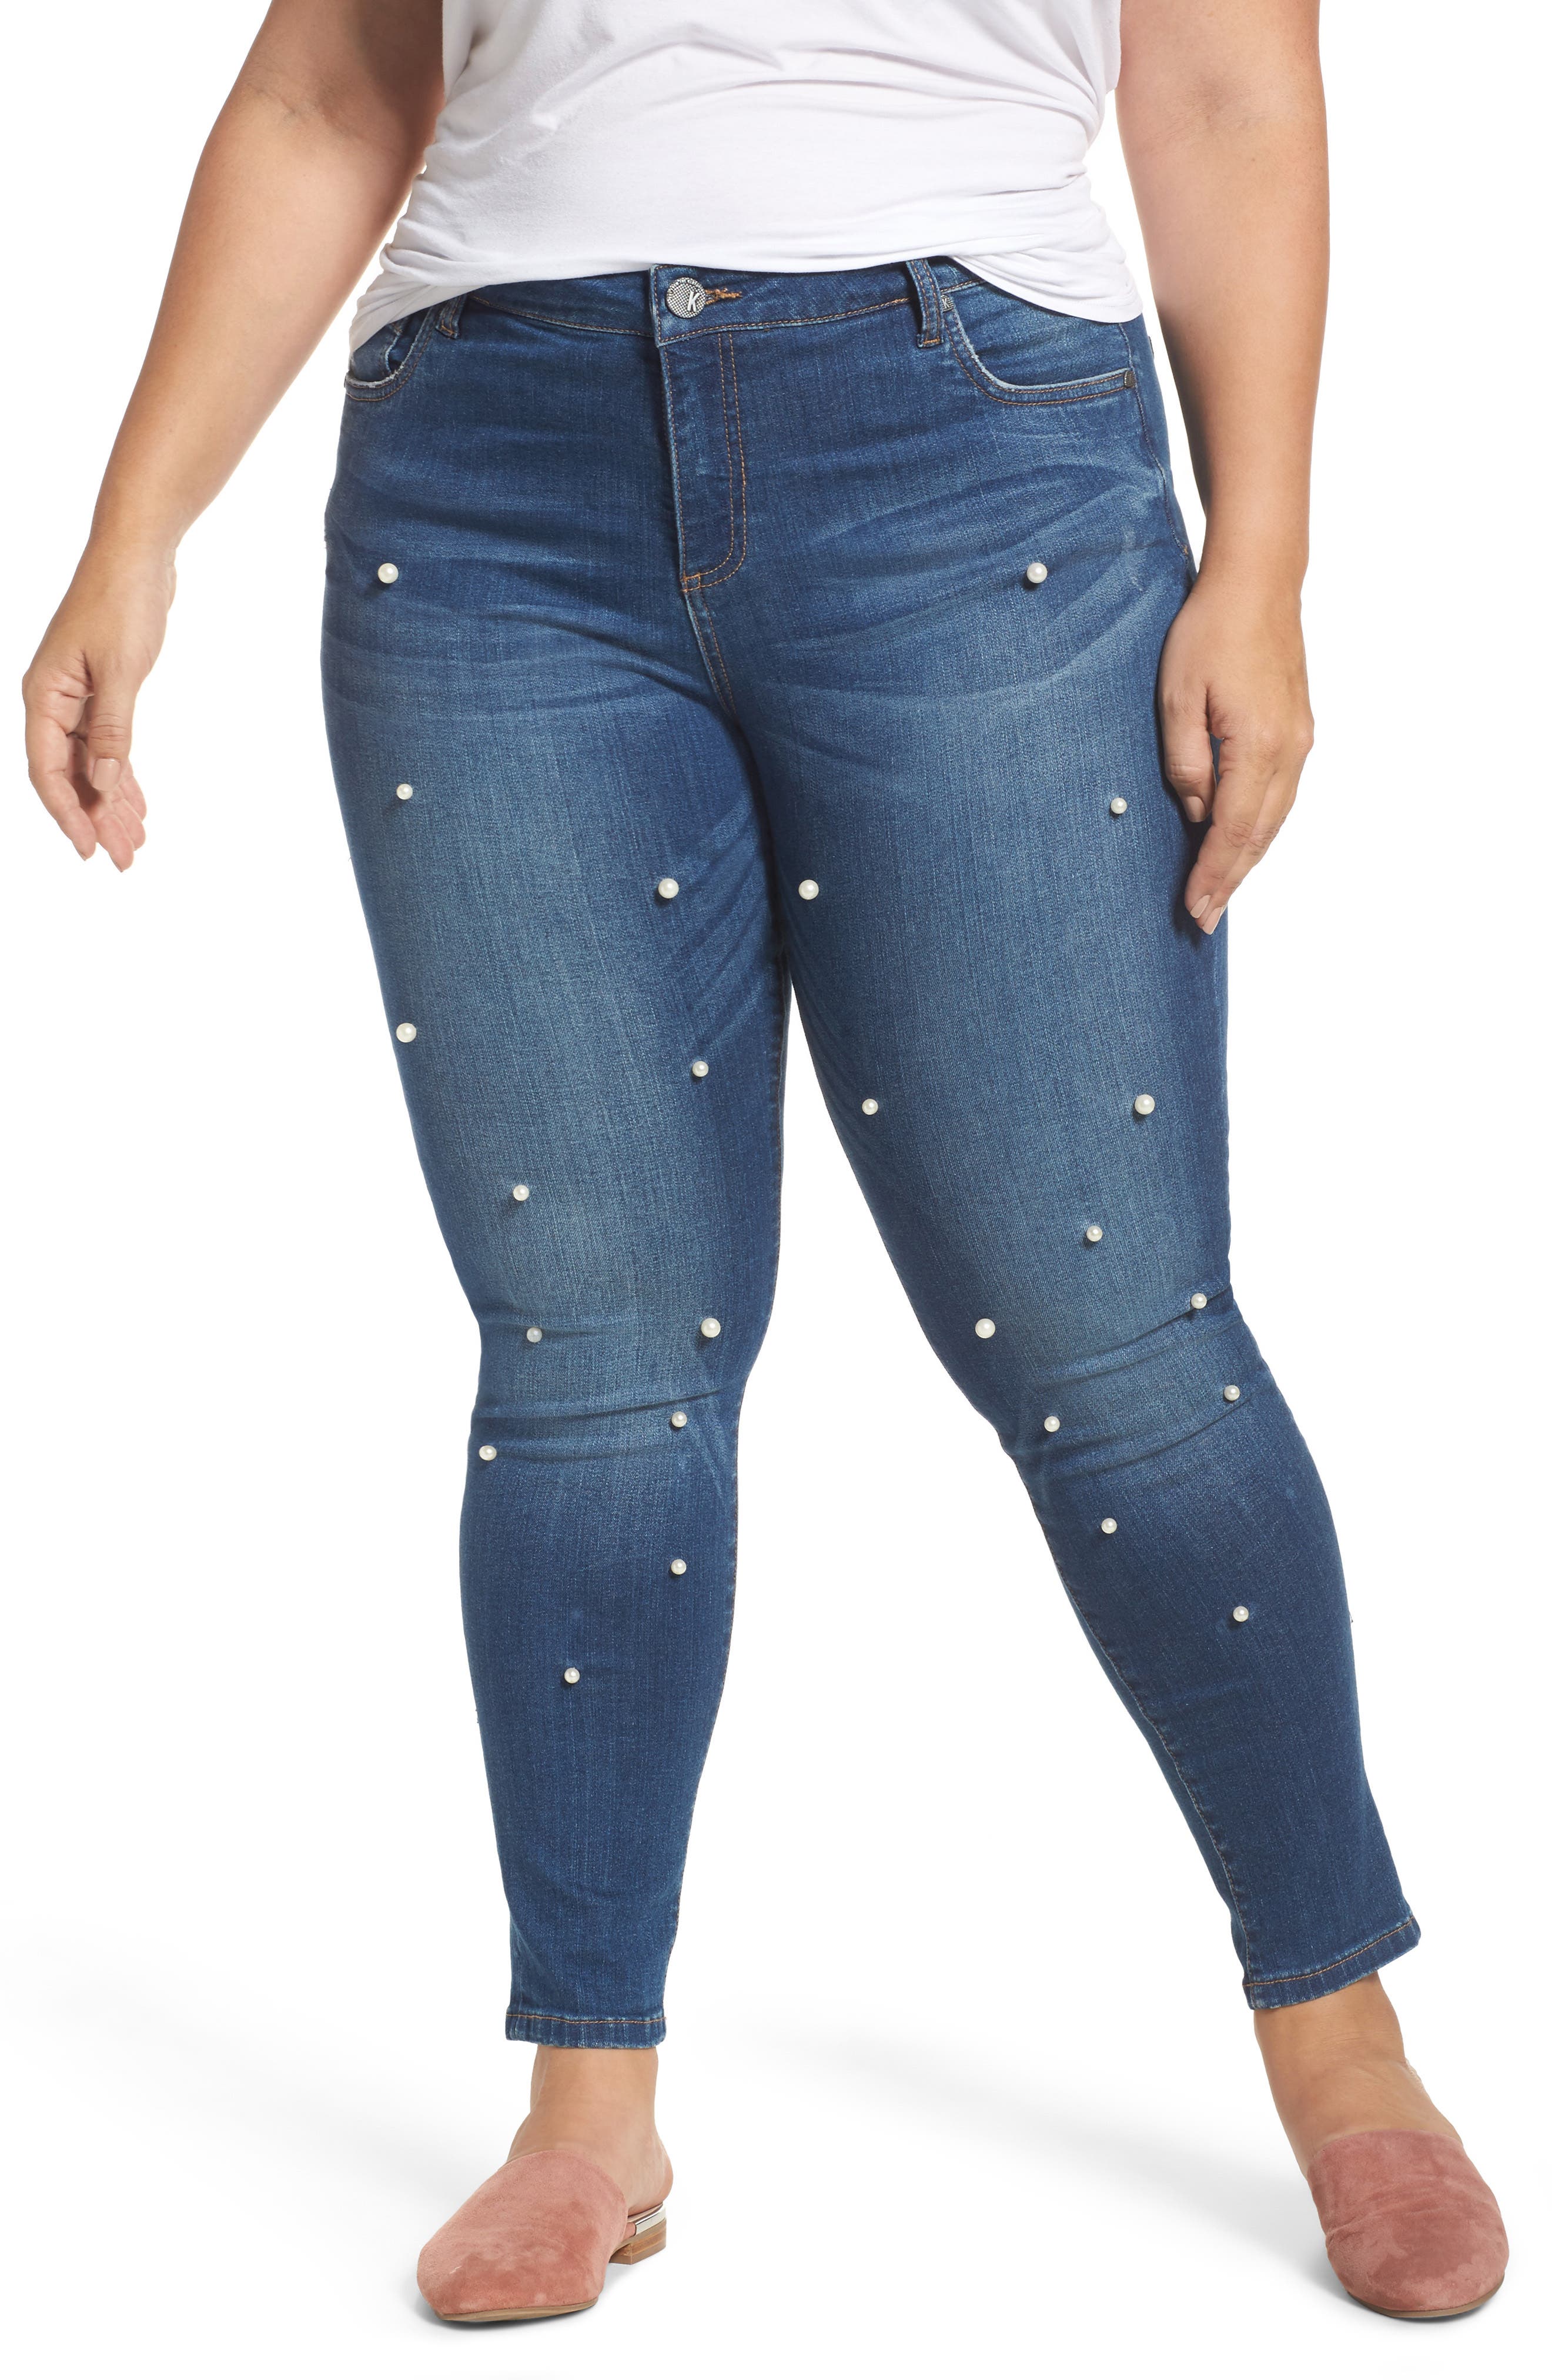 nordstrom plus size jeans